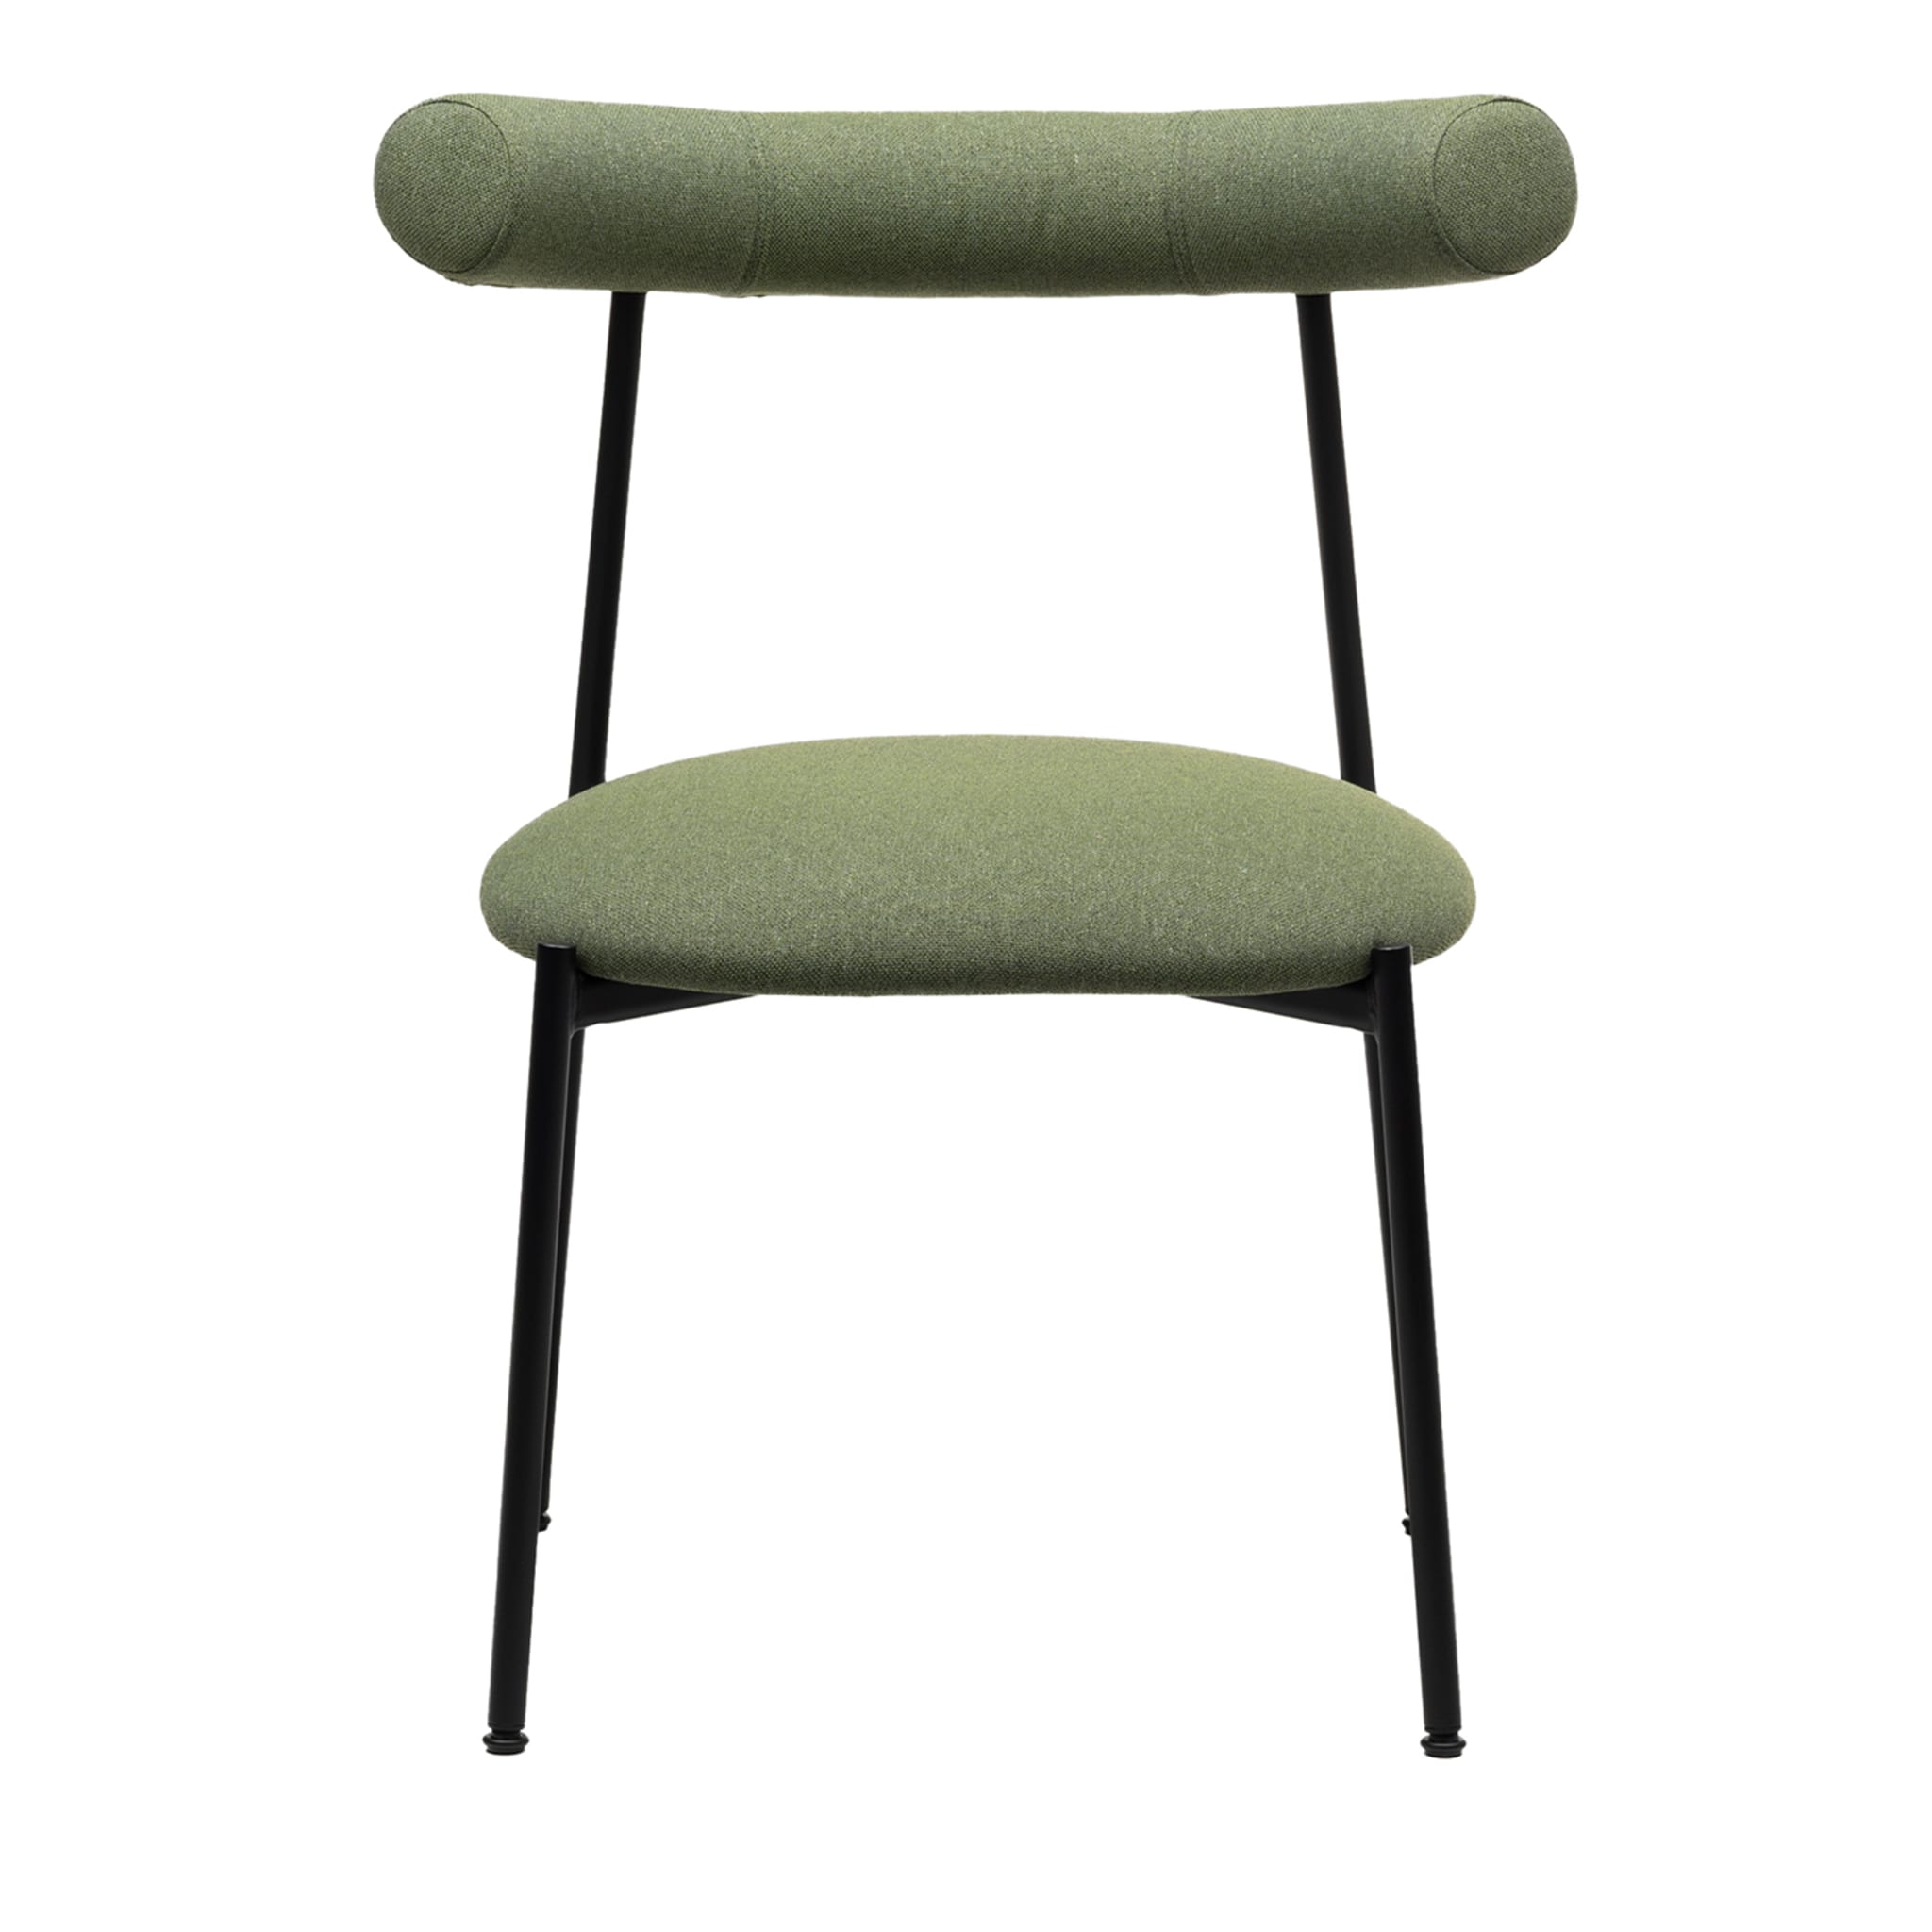 Pampa S Green & Black Chair by Studio Pastina - Main view